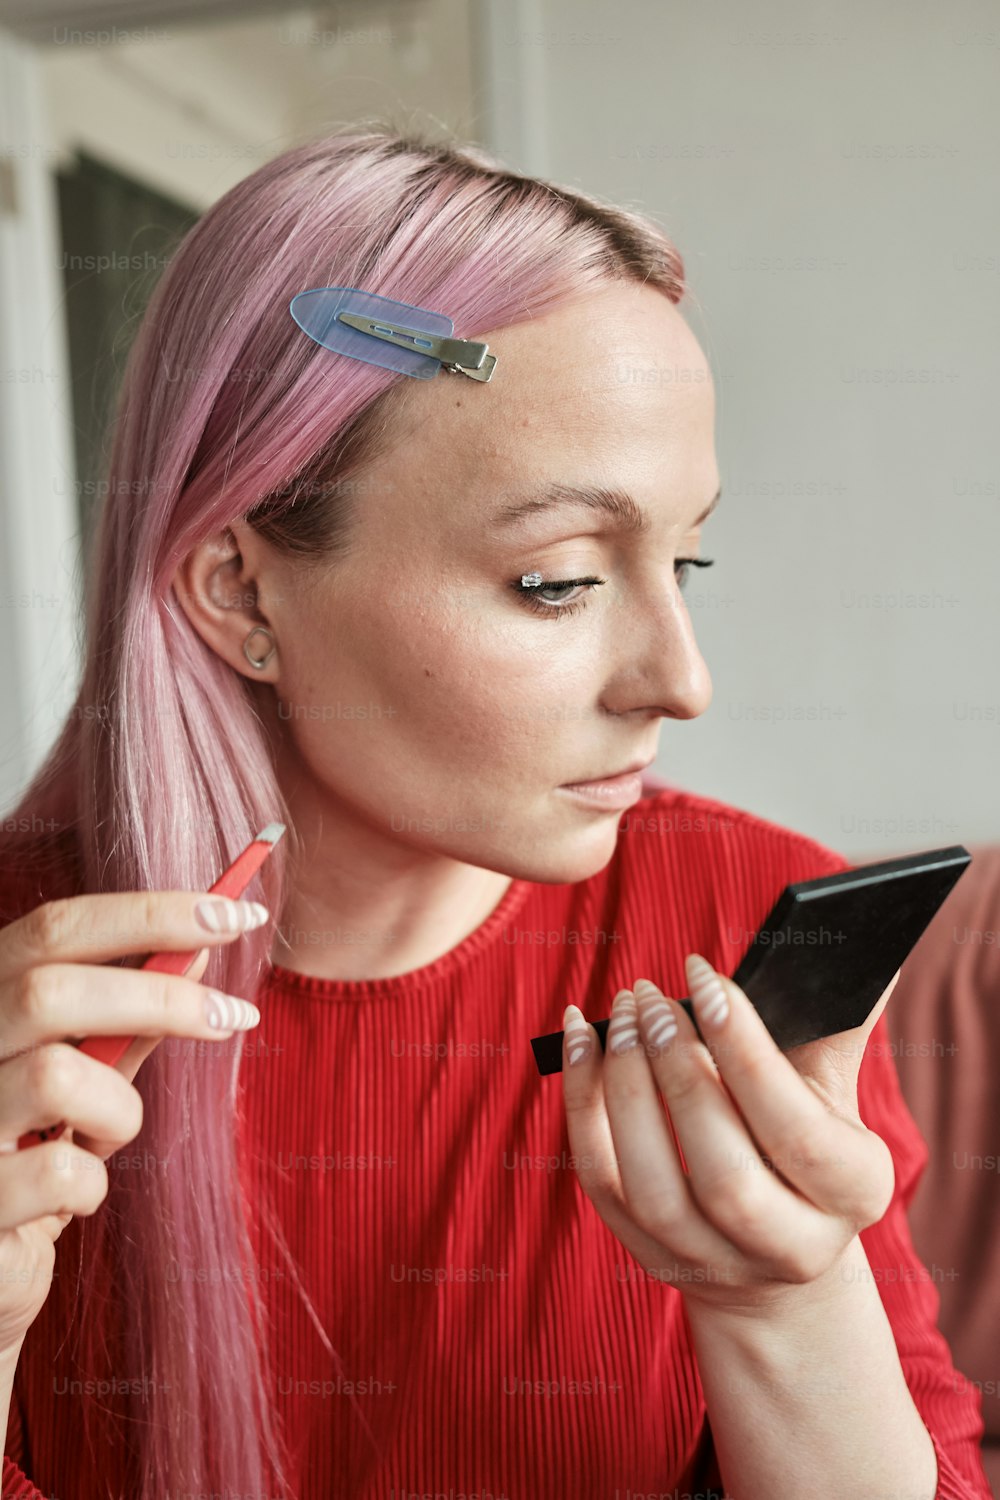 Una mujer con cabello rosado usando un teléfono celular